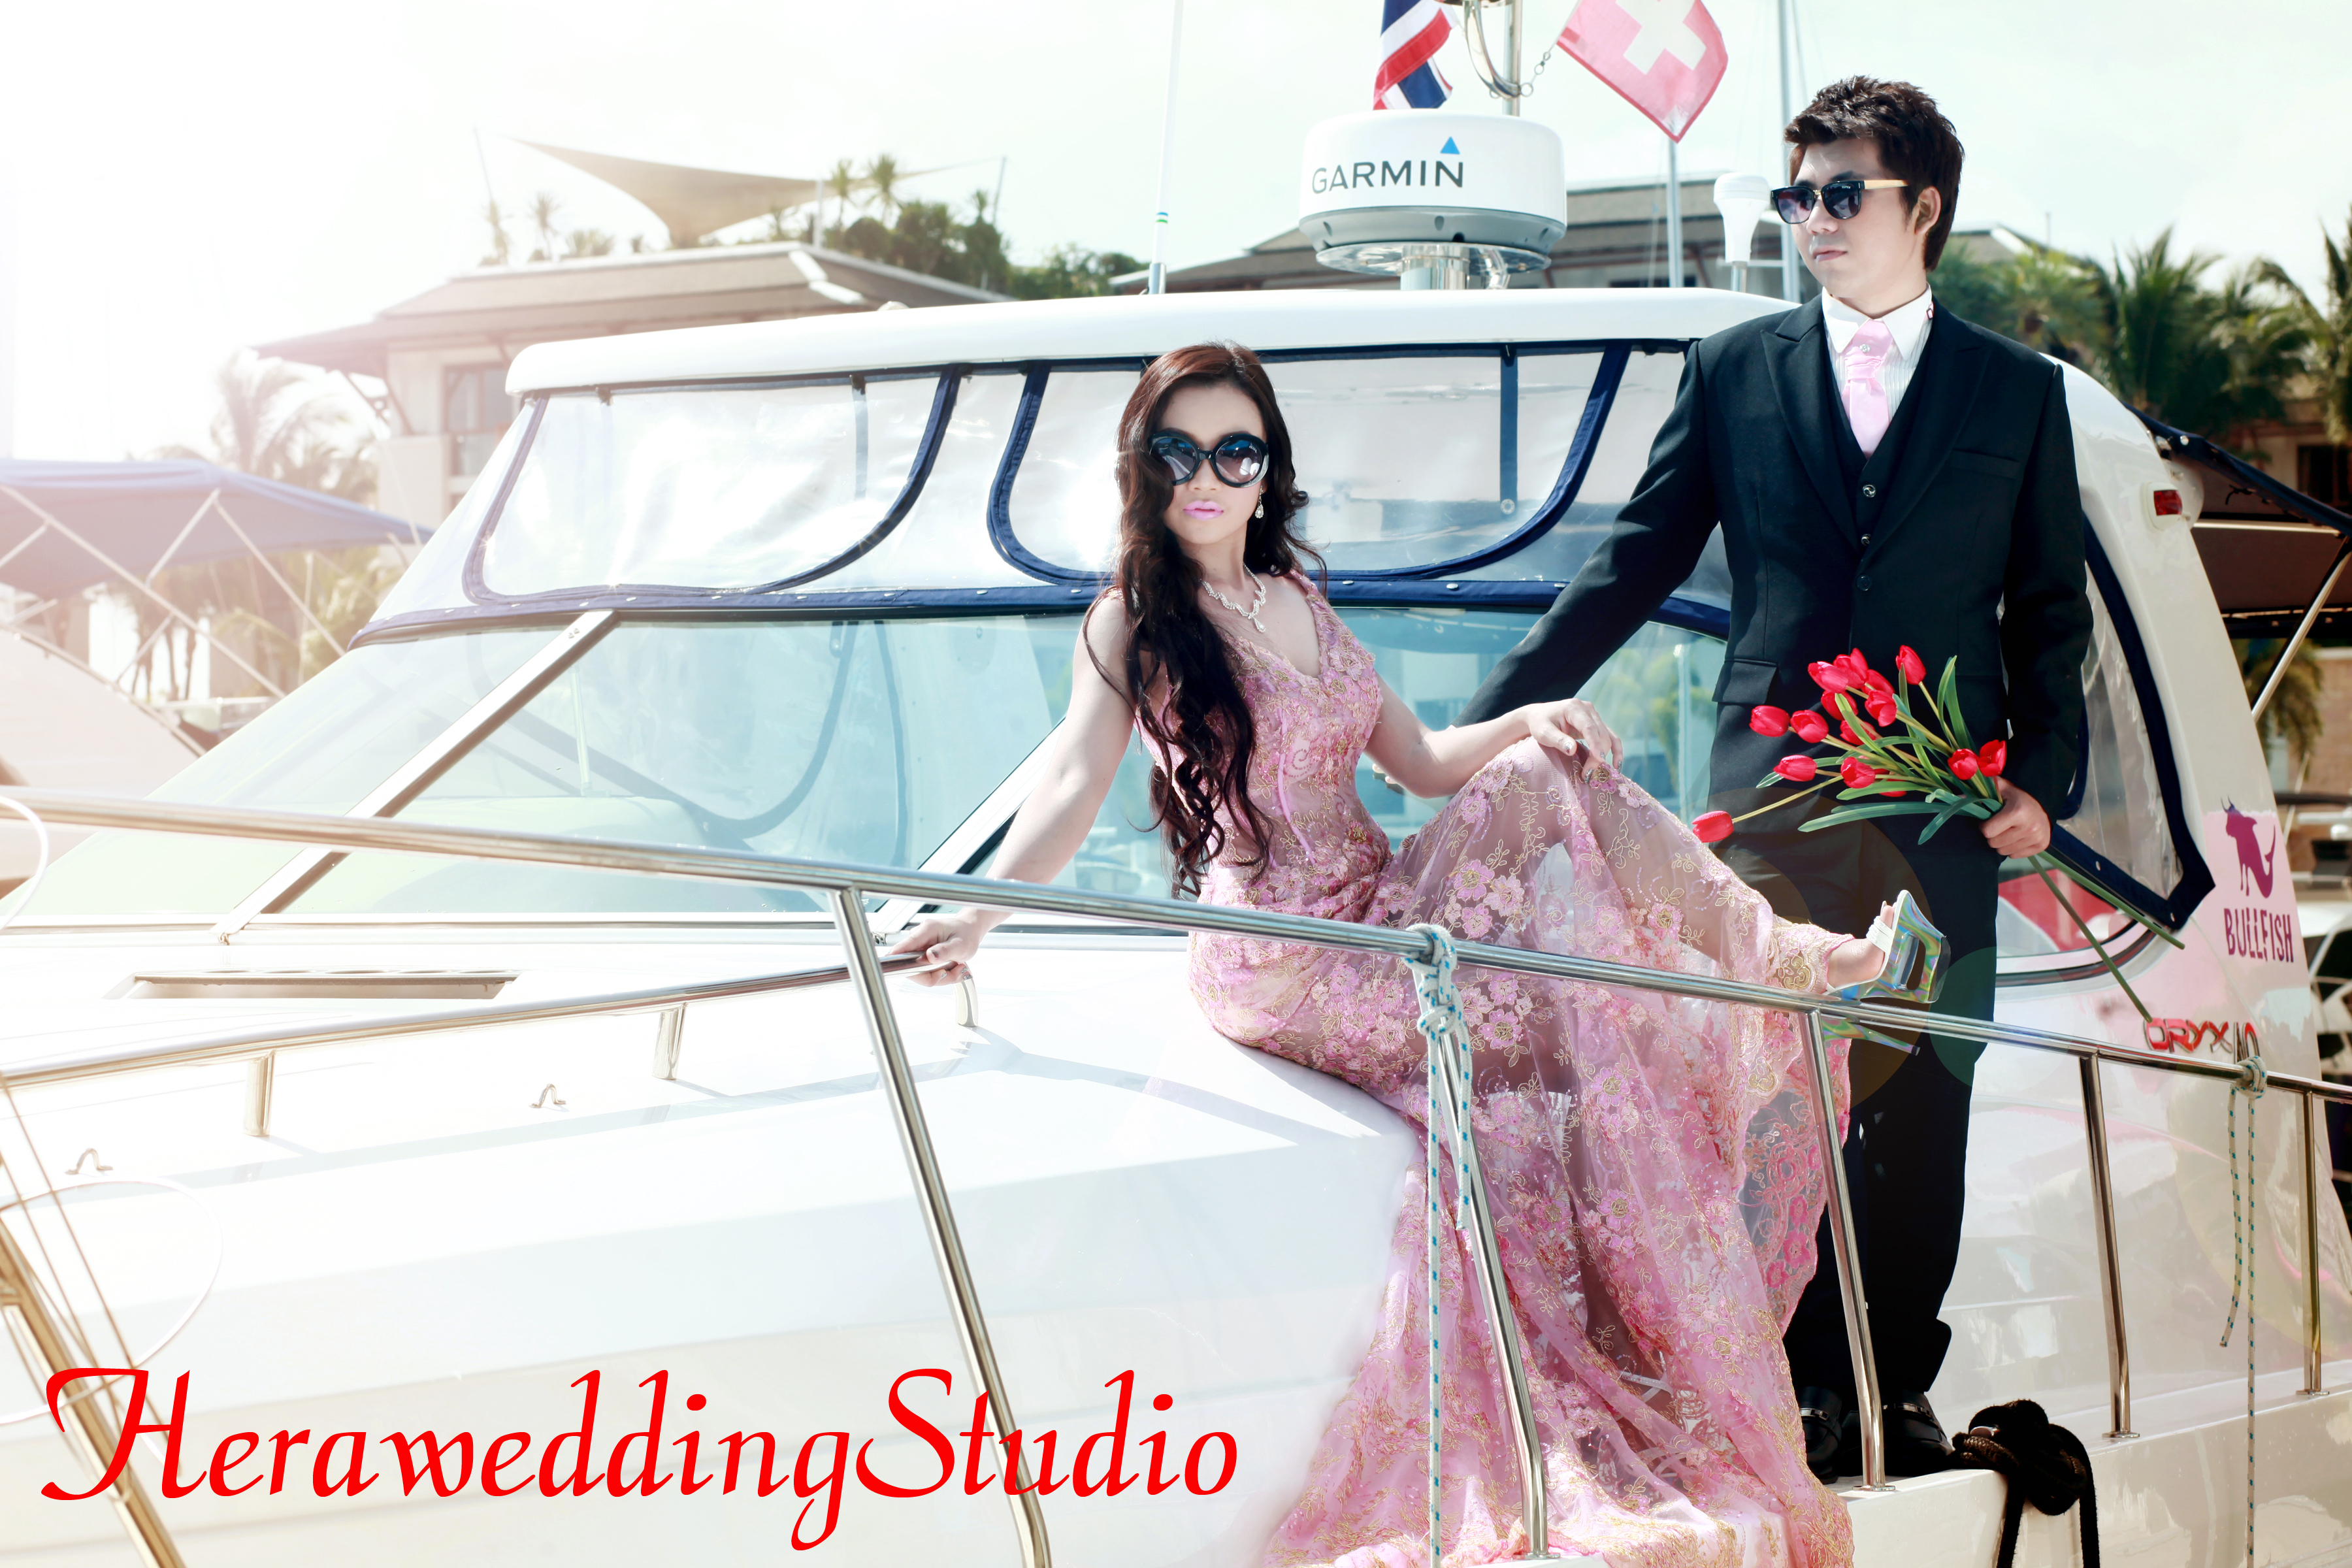 http://www.weddinginlove.com/vender/index.php?name=relations